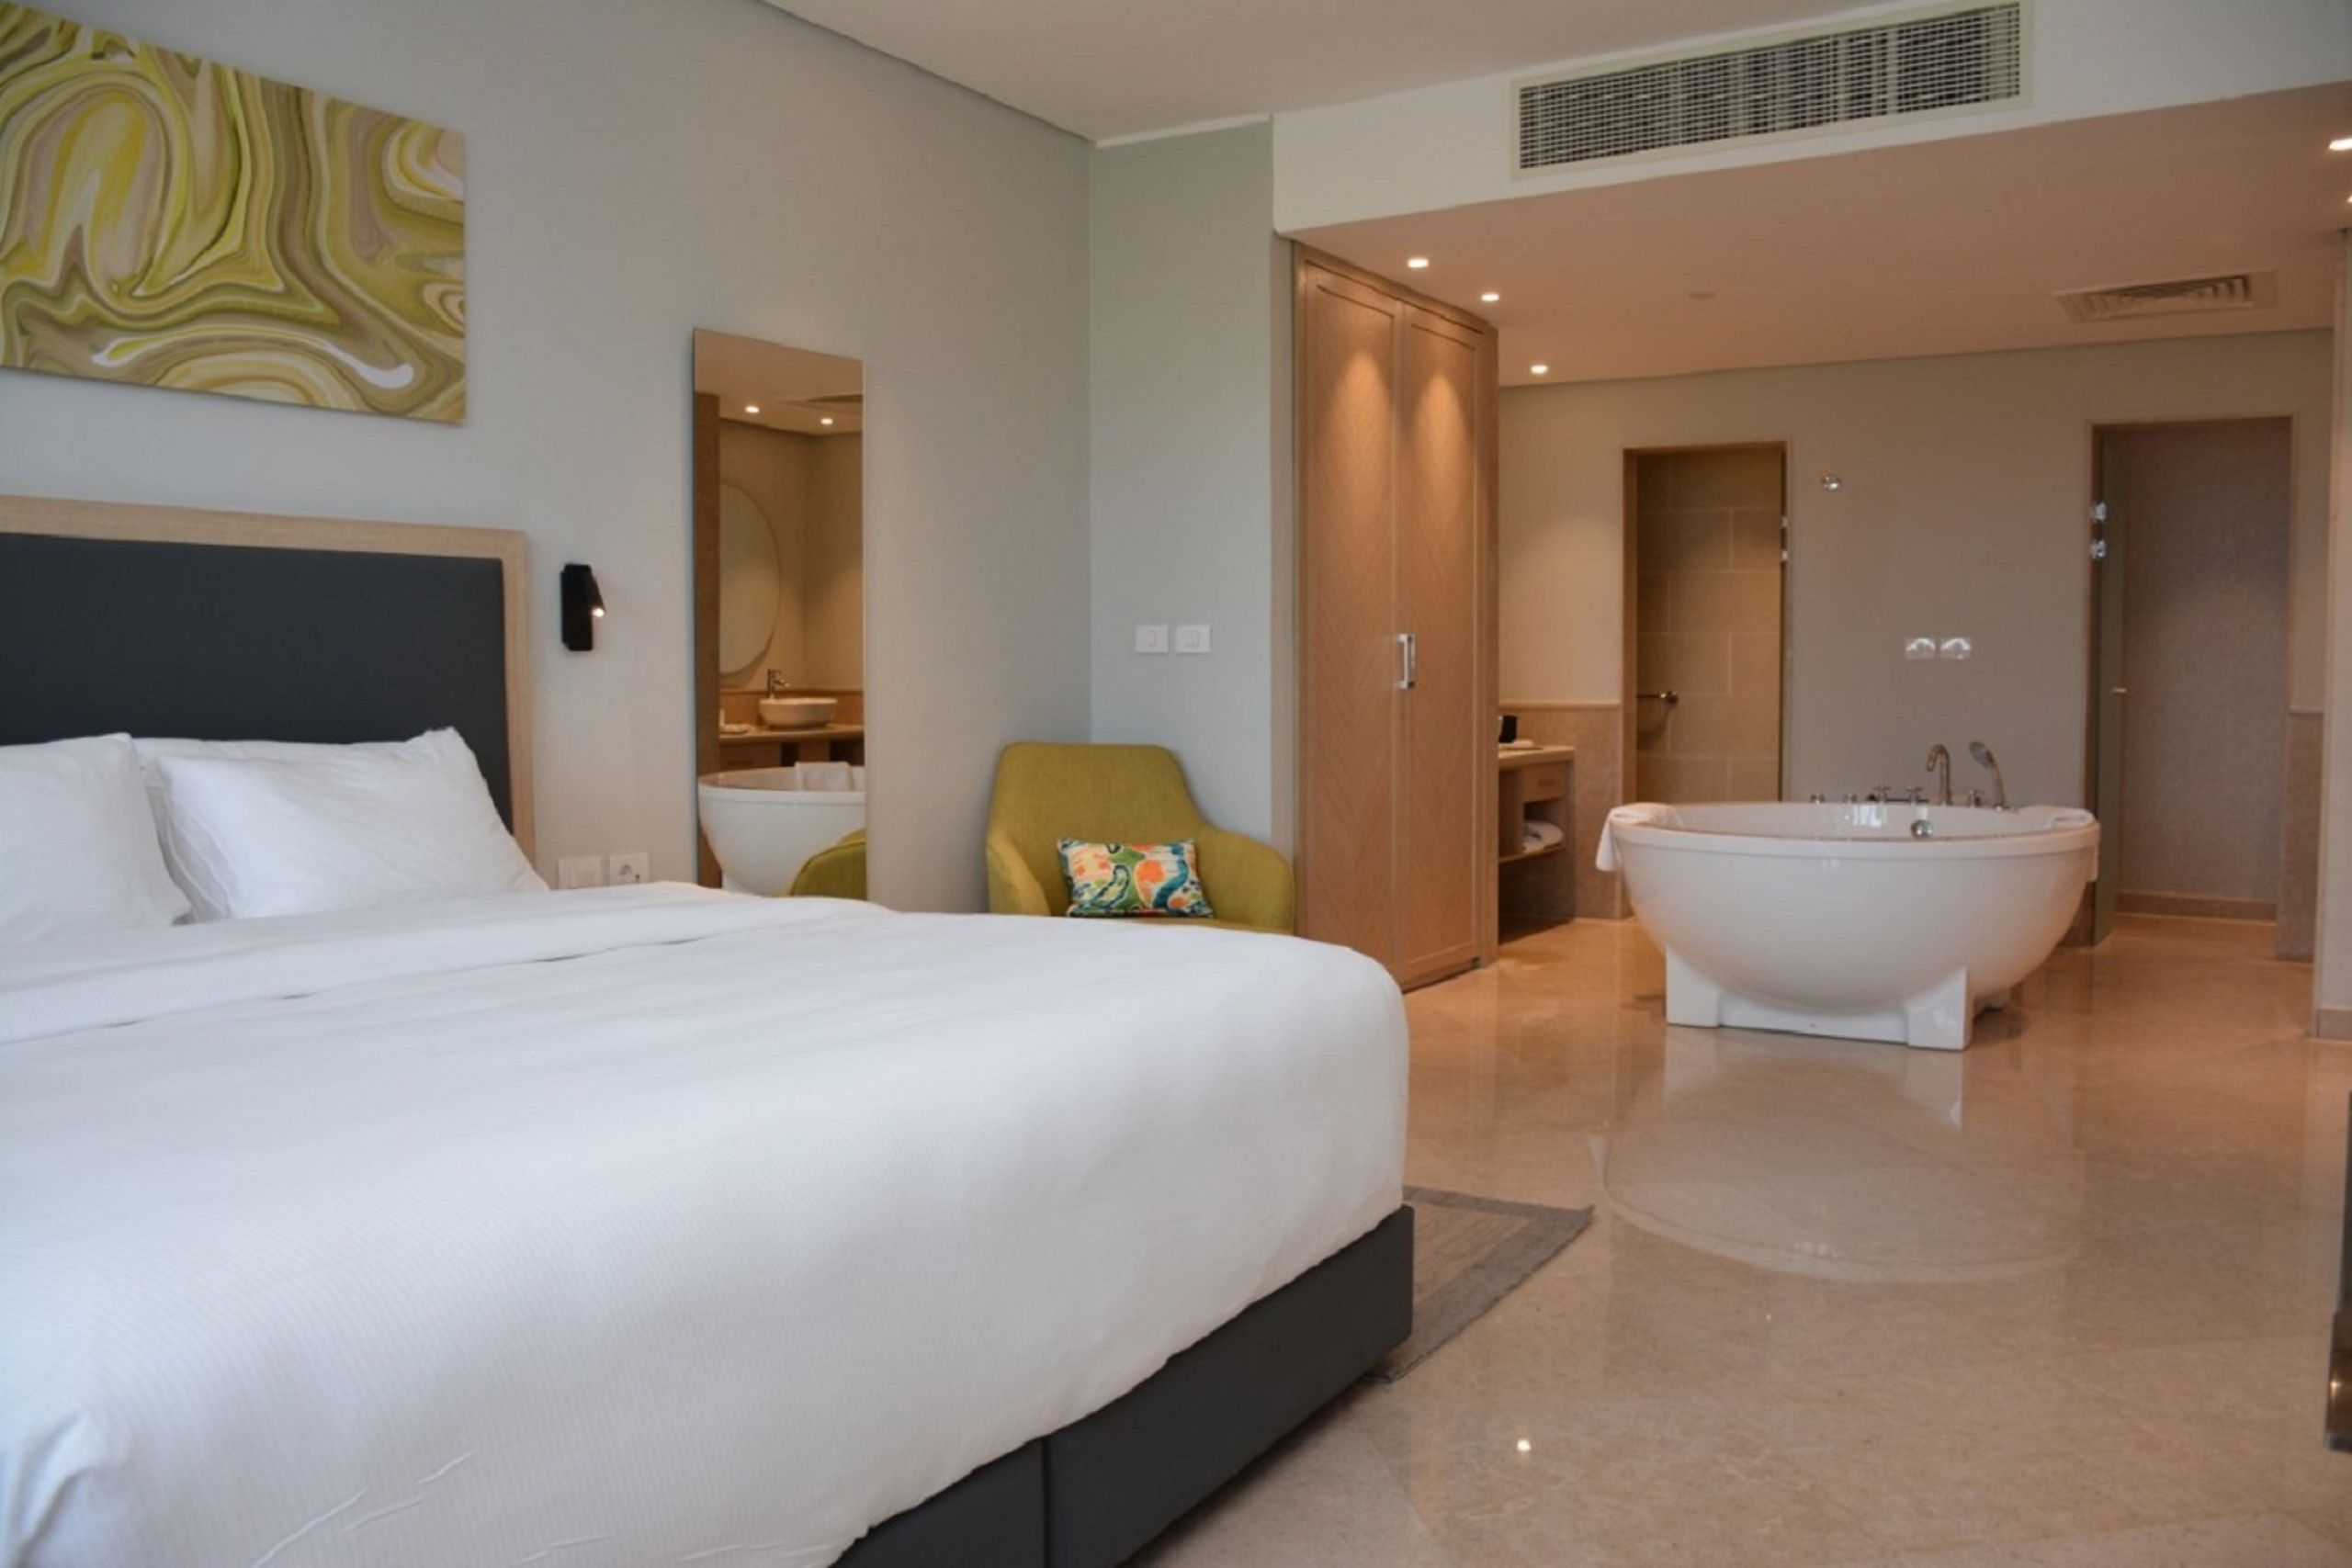 Steigenberger Aldau Beach Hotel - Hurghada - Egipto - La Suite - cama y baño